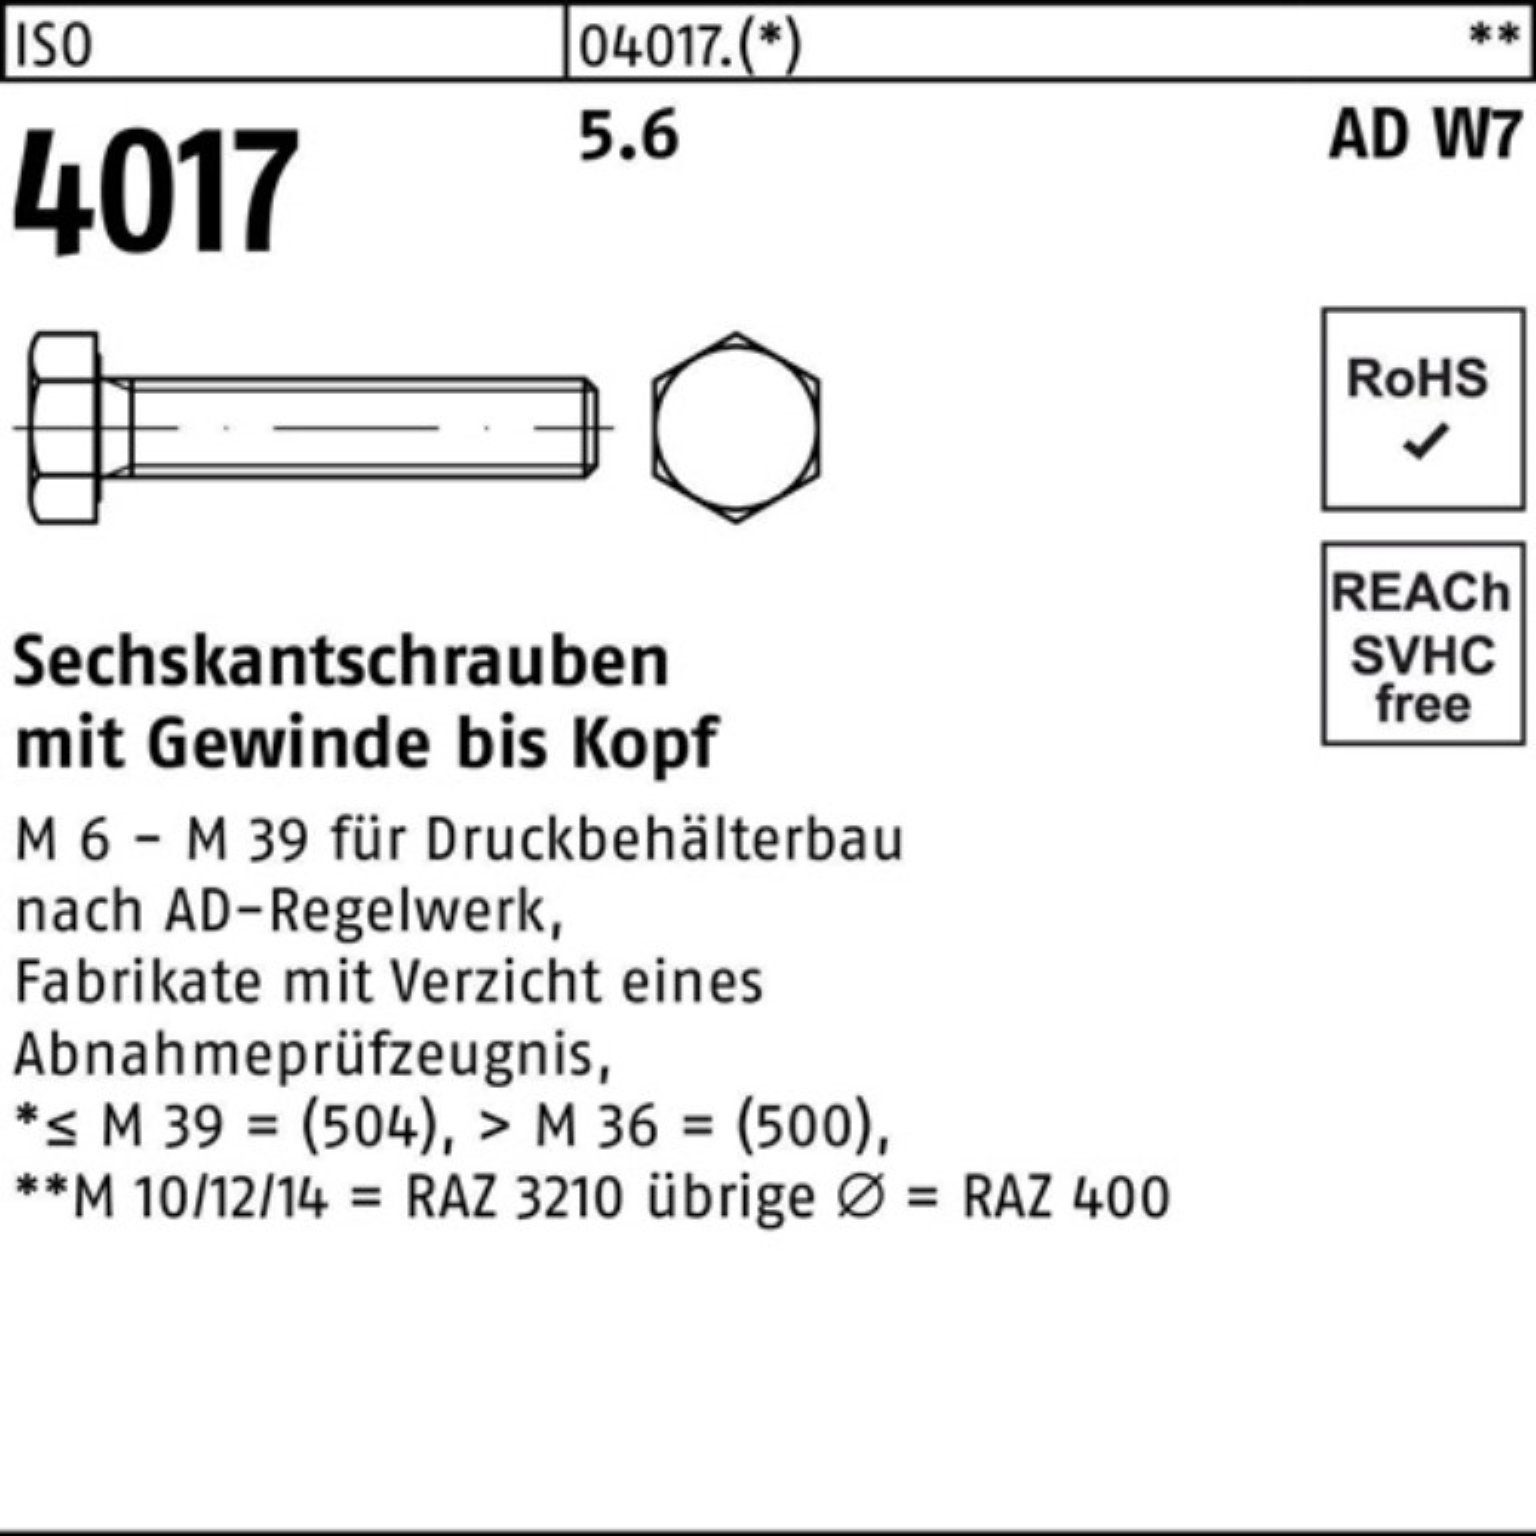 Bufab Sechskantschraube 200er Pack Sechskantschraube ISO 4017 VG M10x 16 5.6 AD W7 200 Stück